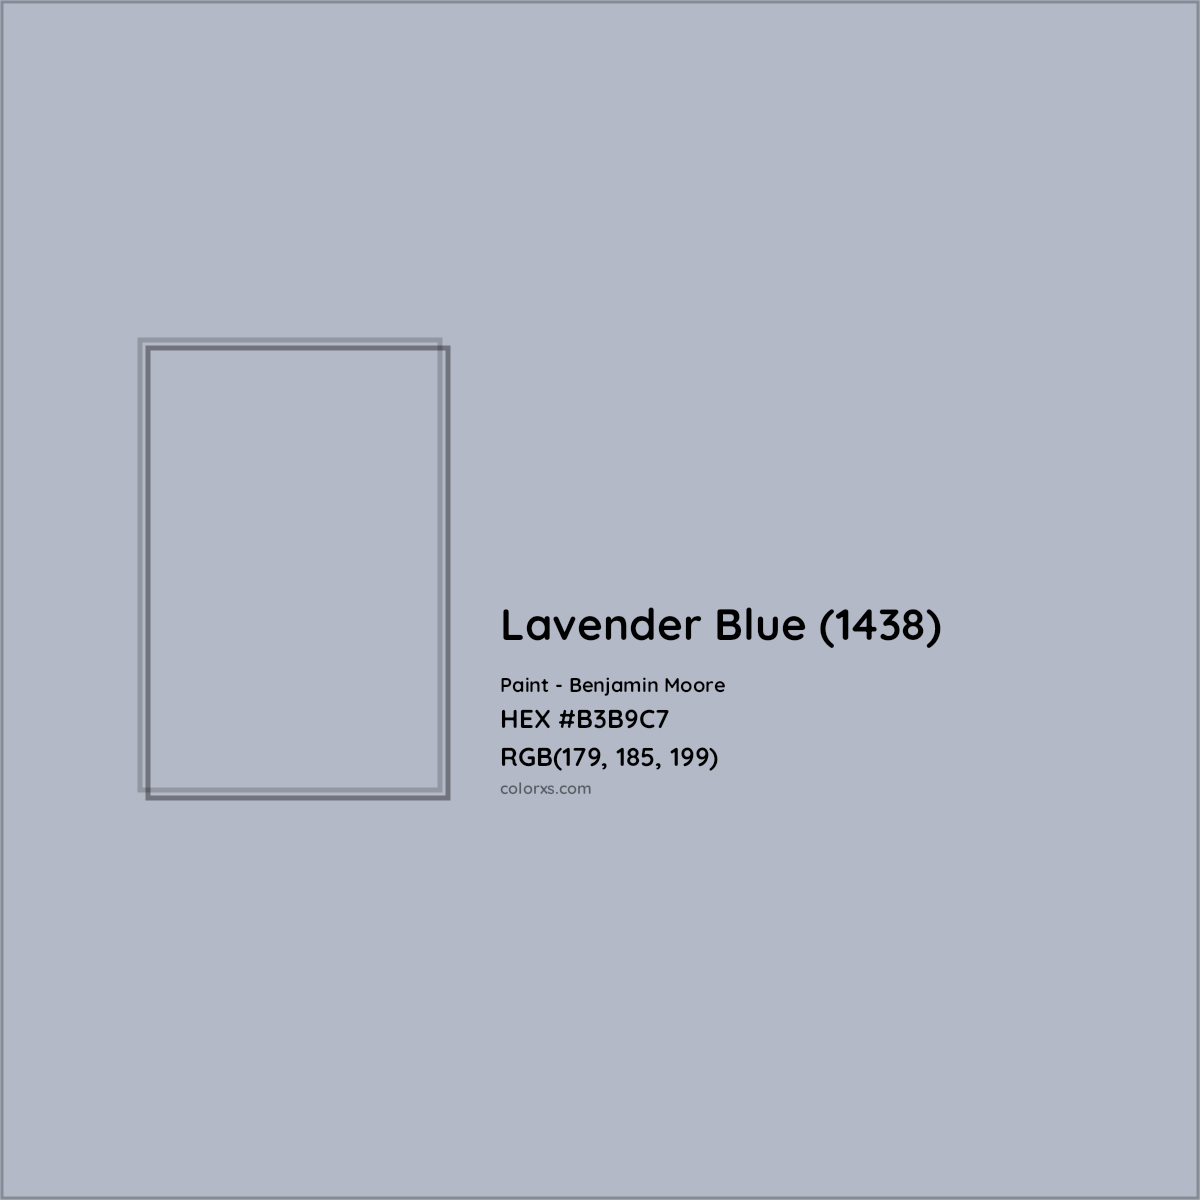 HEX #B3B9C7 Lavender Blue (1438) Paint Benjamin Moore - Color Code